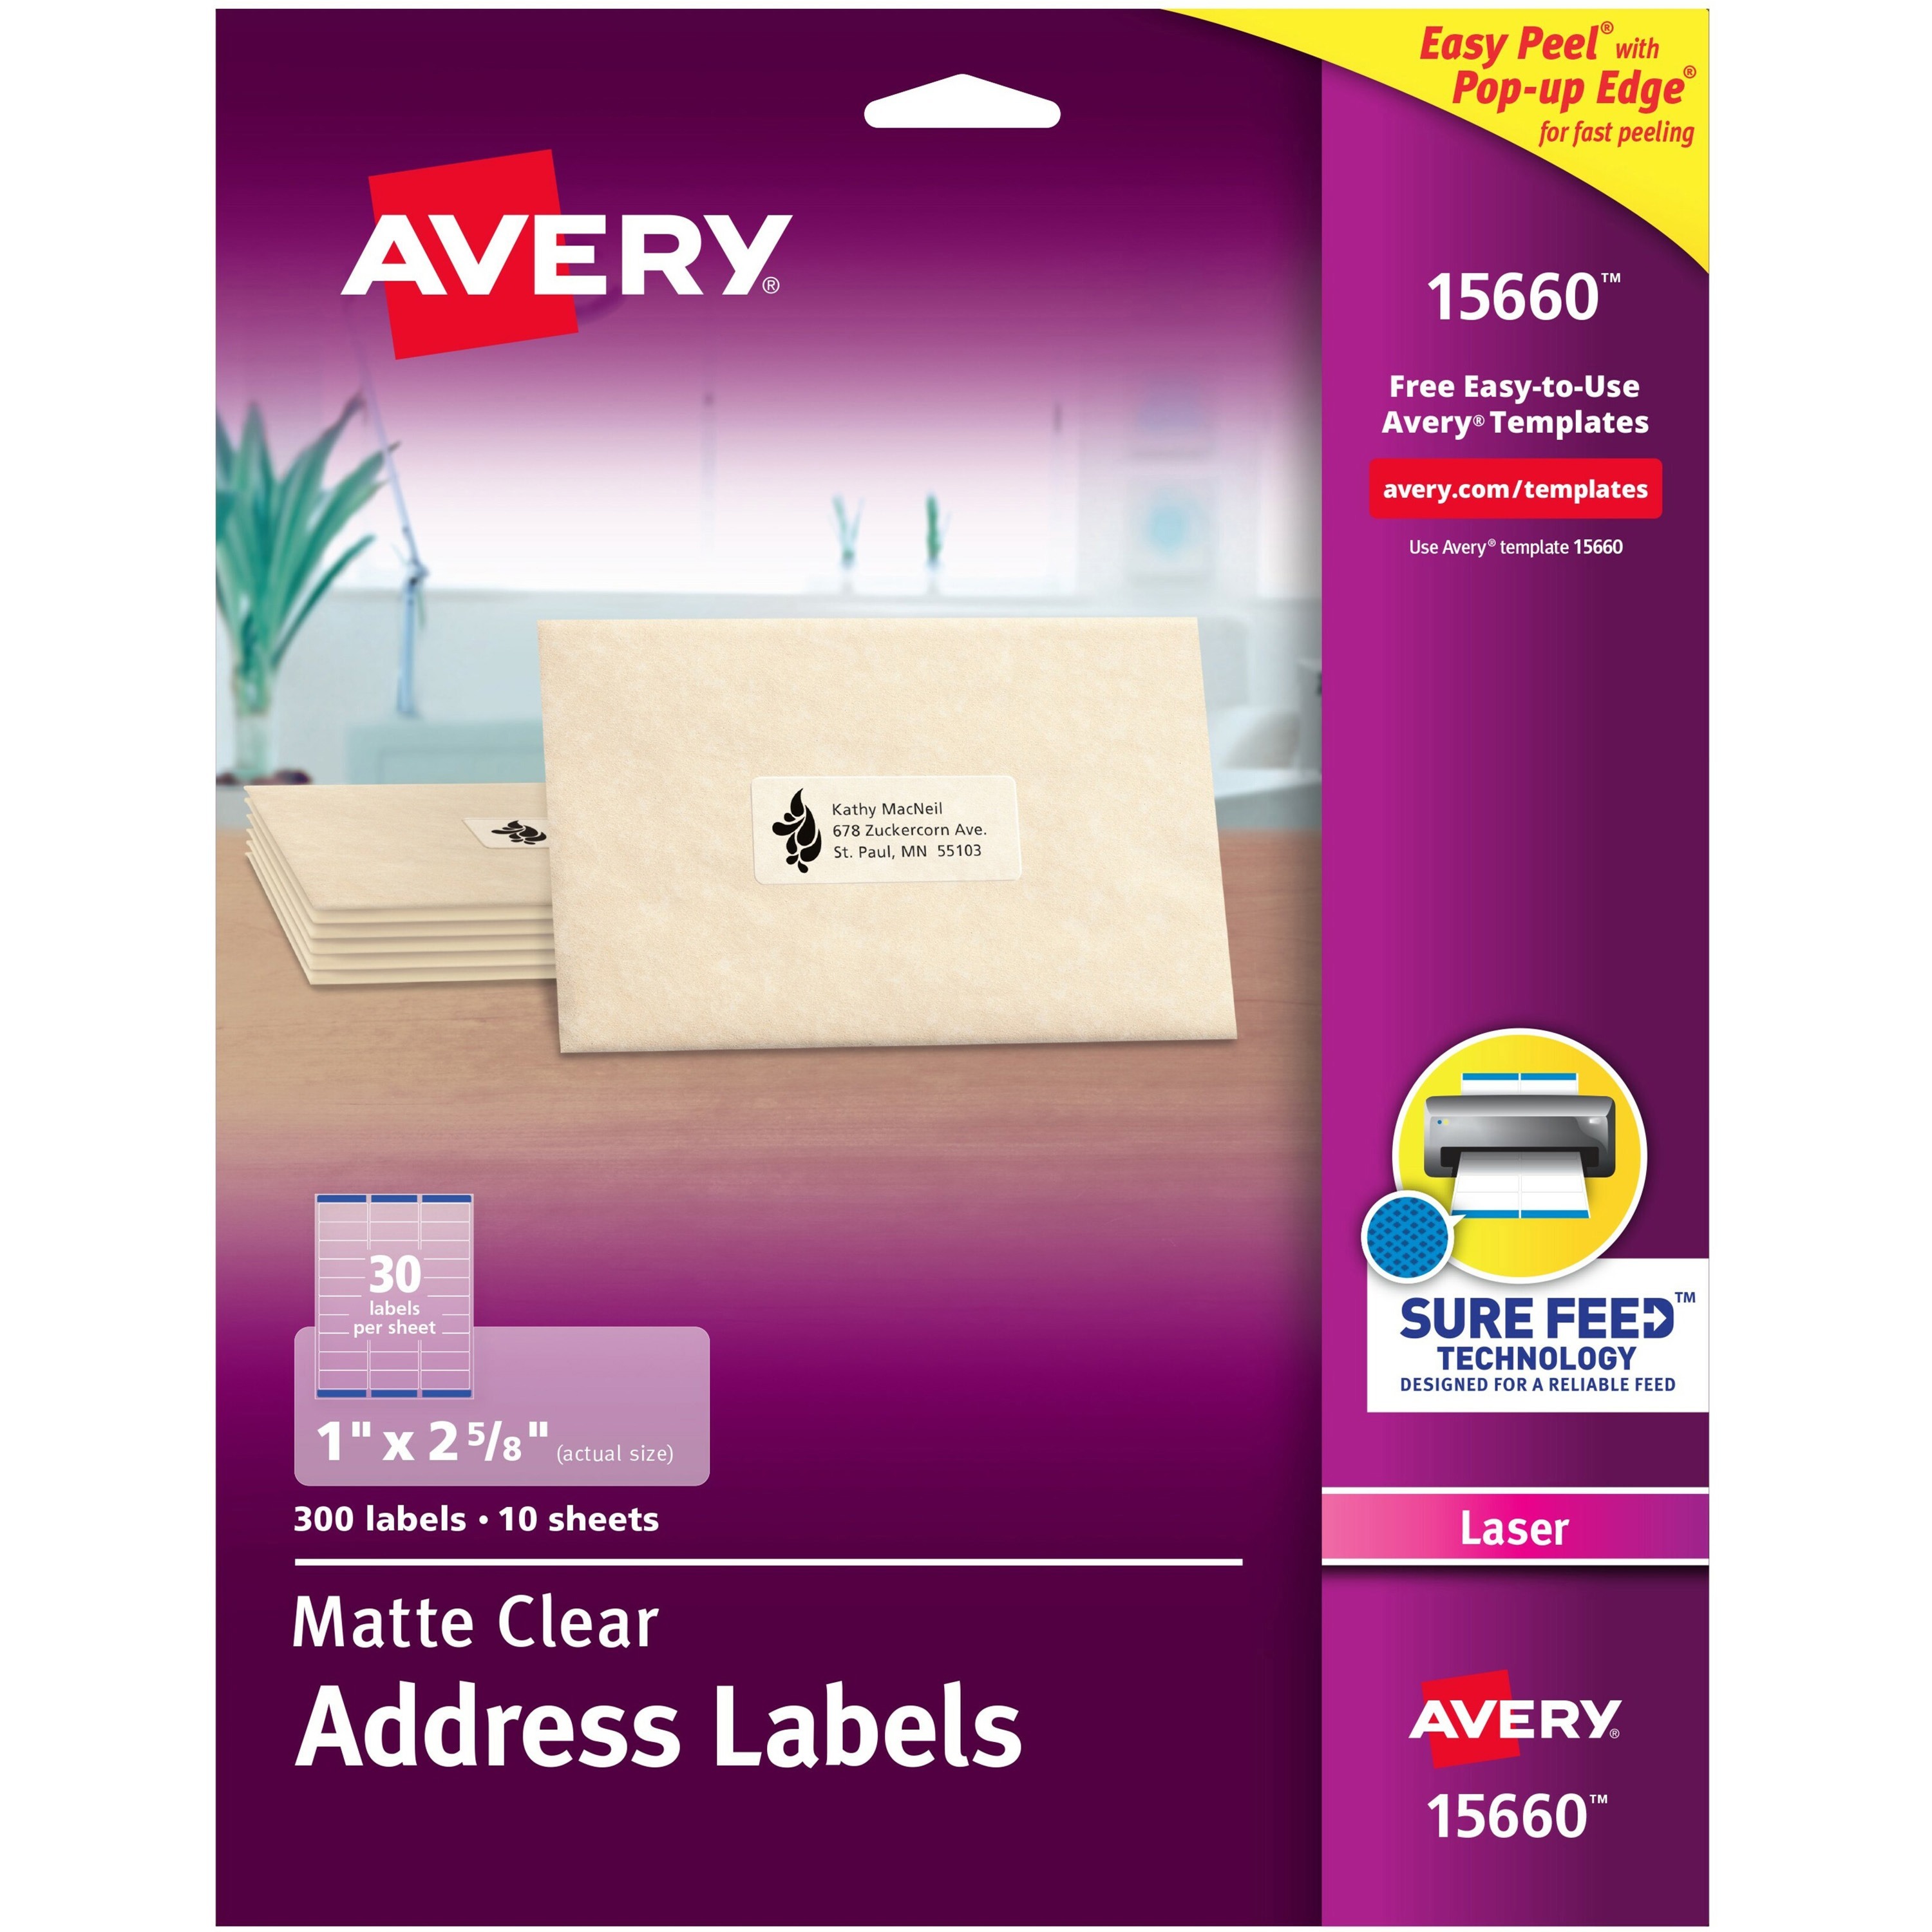 Avery® Easy Peel Address Labels - 1